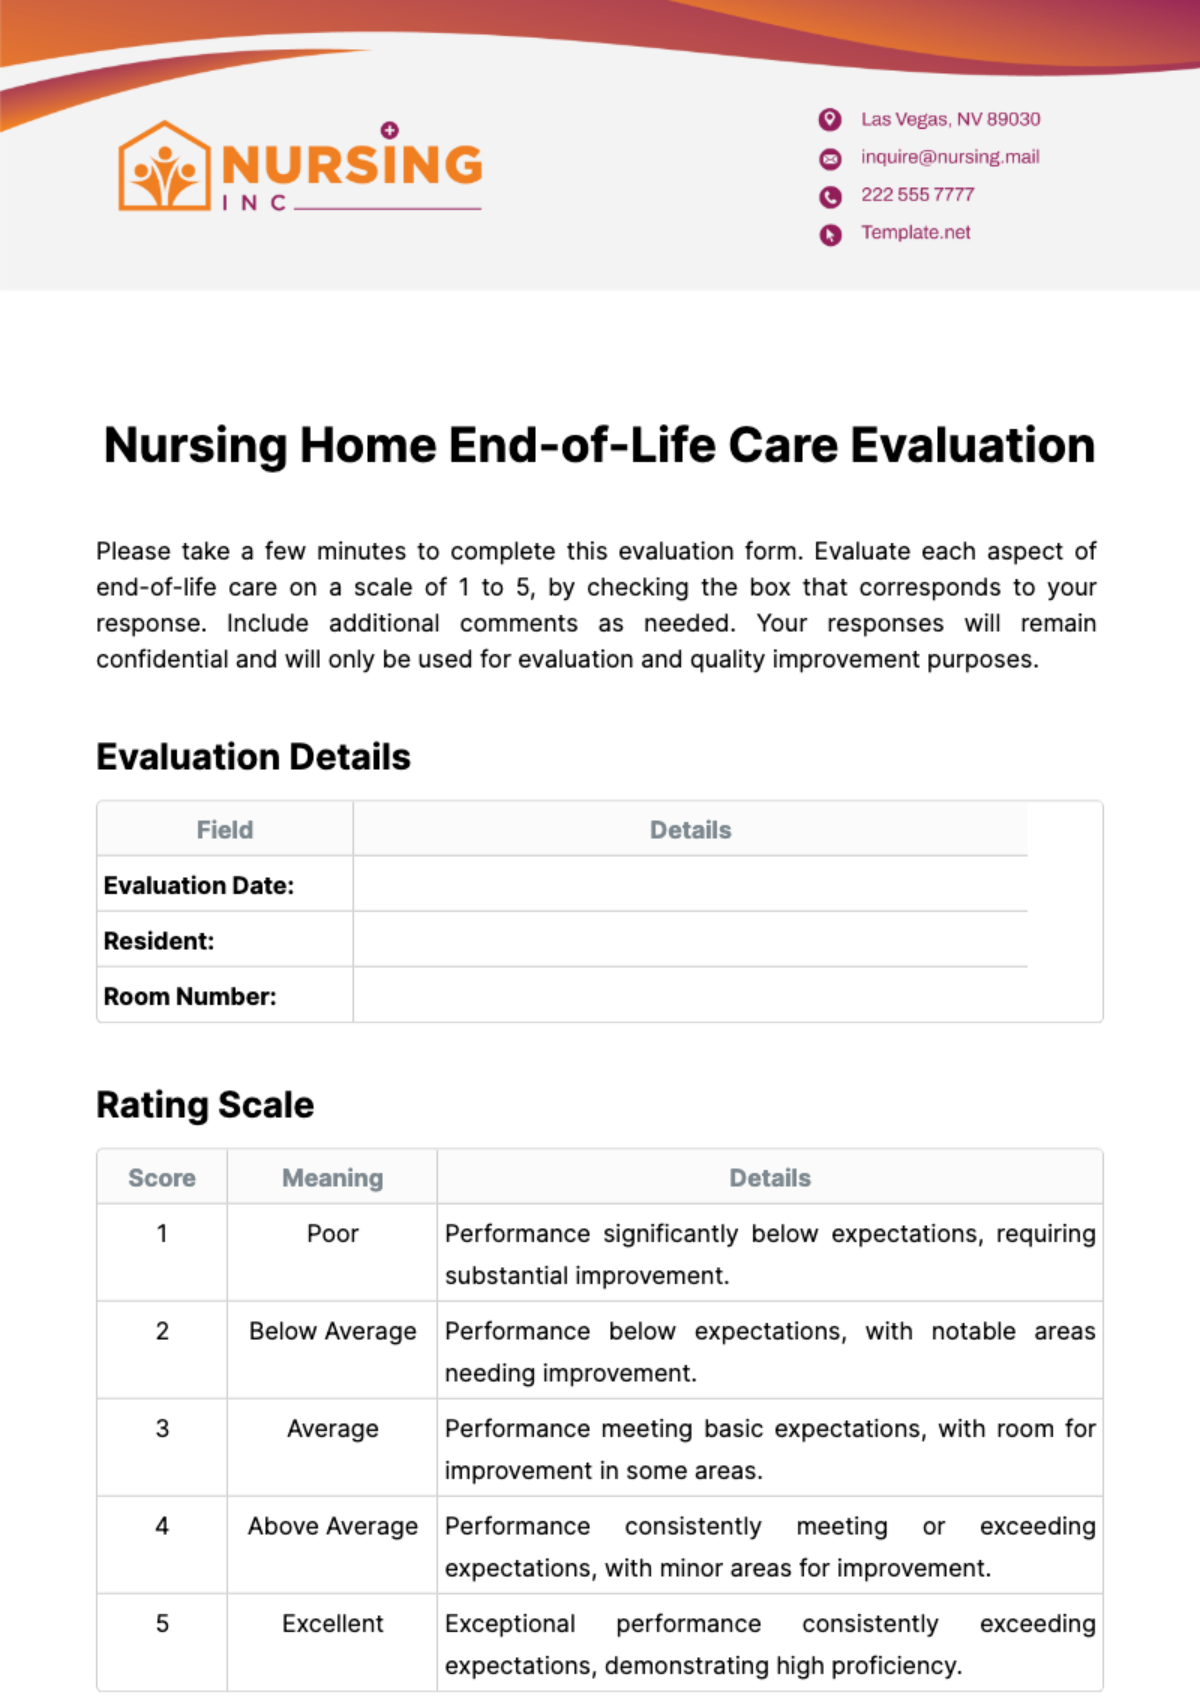 Nursing Home End-of-Life Care Evaluation Template